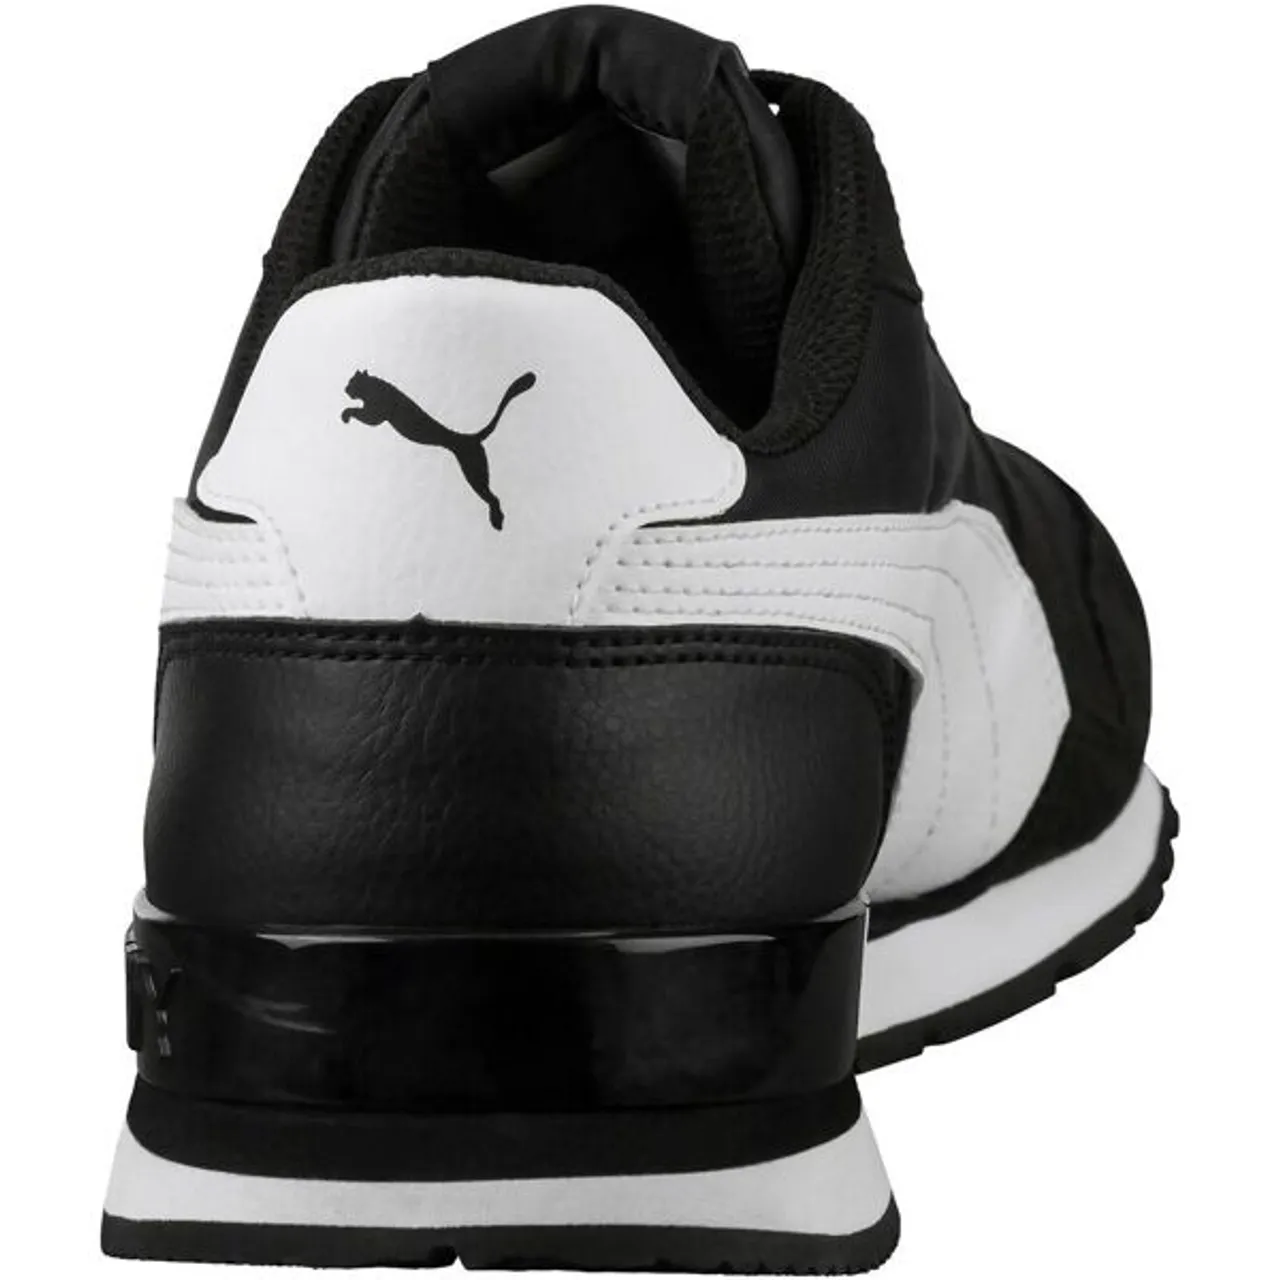 Sneaker PUMA "ST RUNNER V2 NL" Gr. 40, schwarz-weiß (puma black, puma white) Schuhe Puma